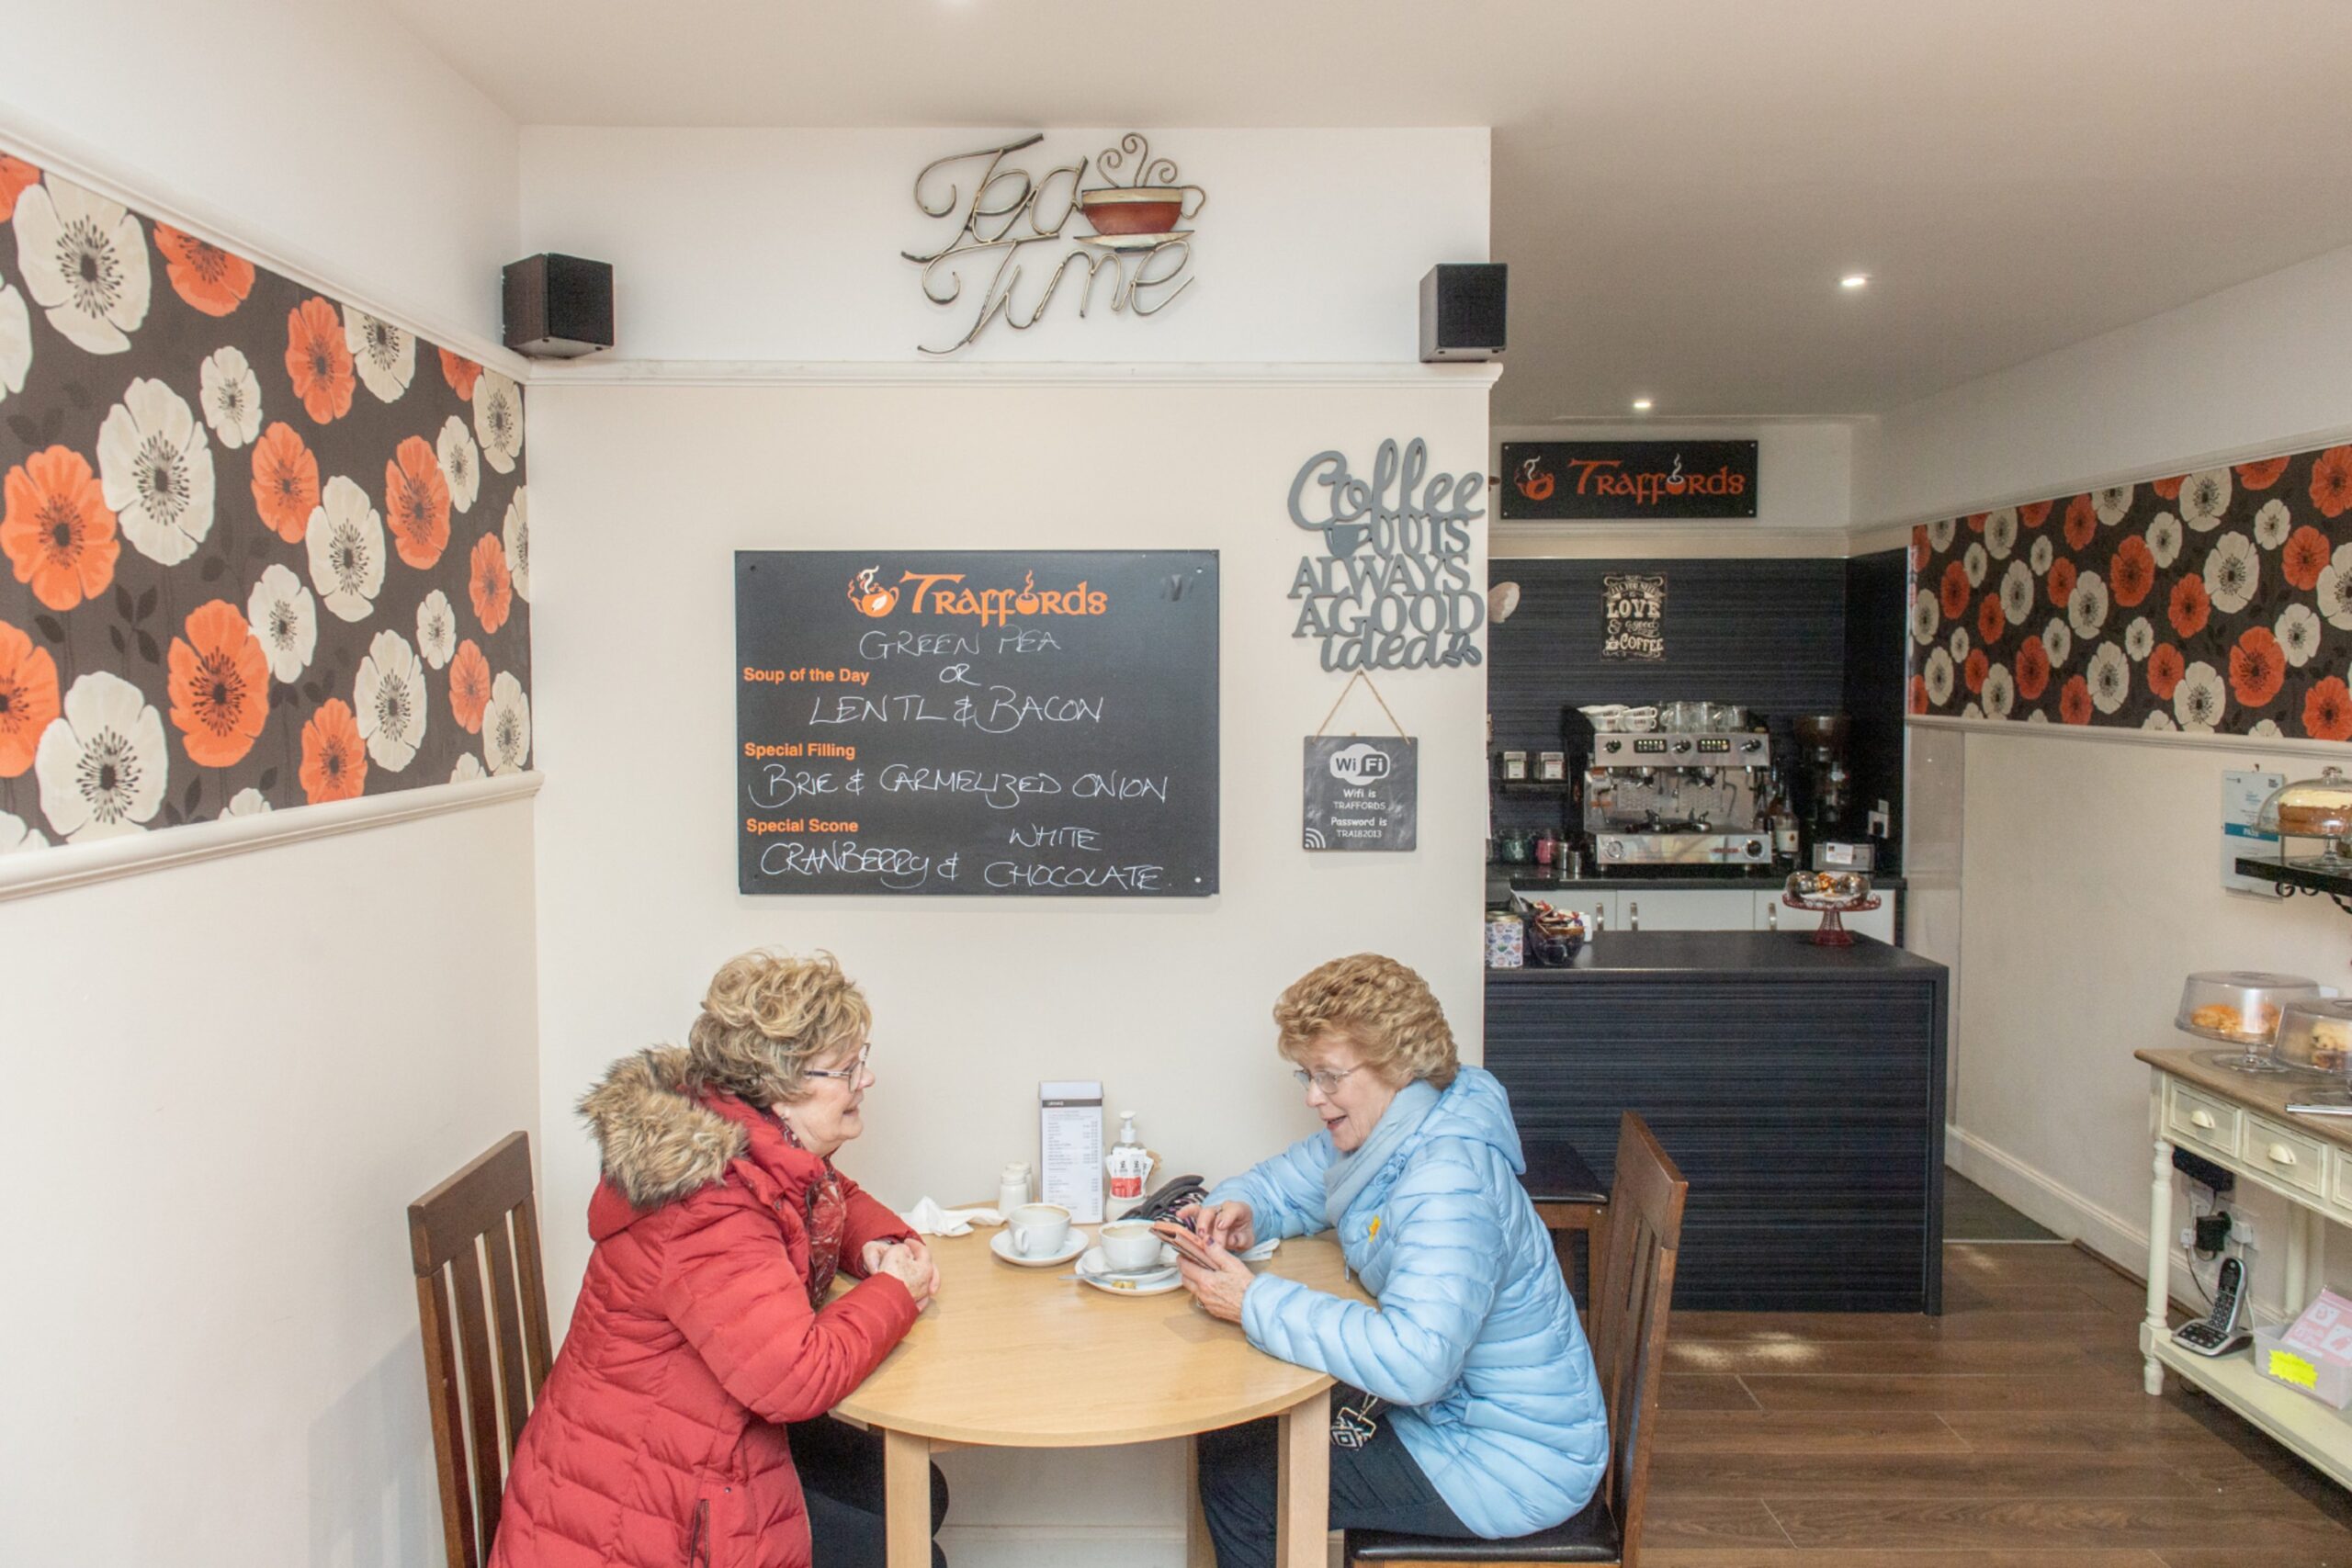 Interior of Traffords coffee house.